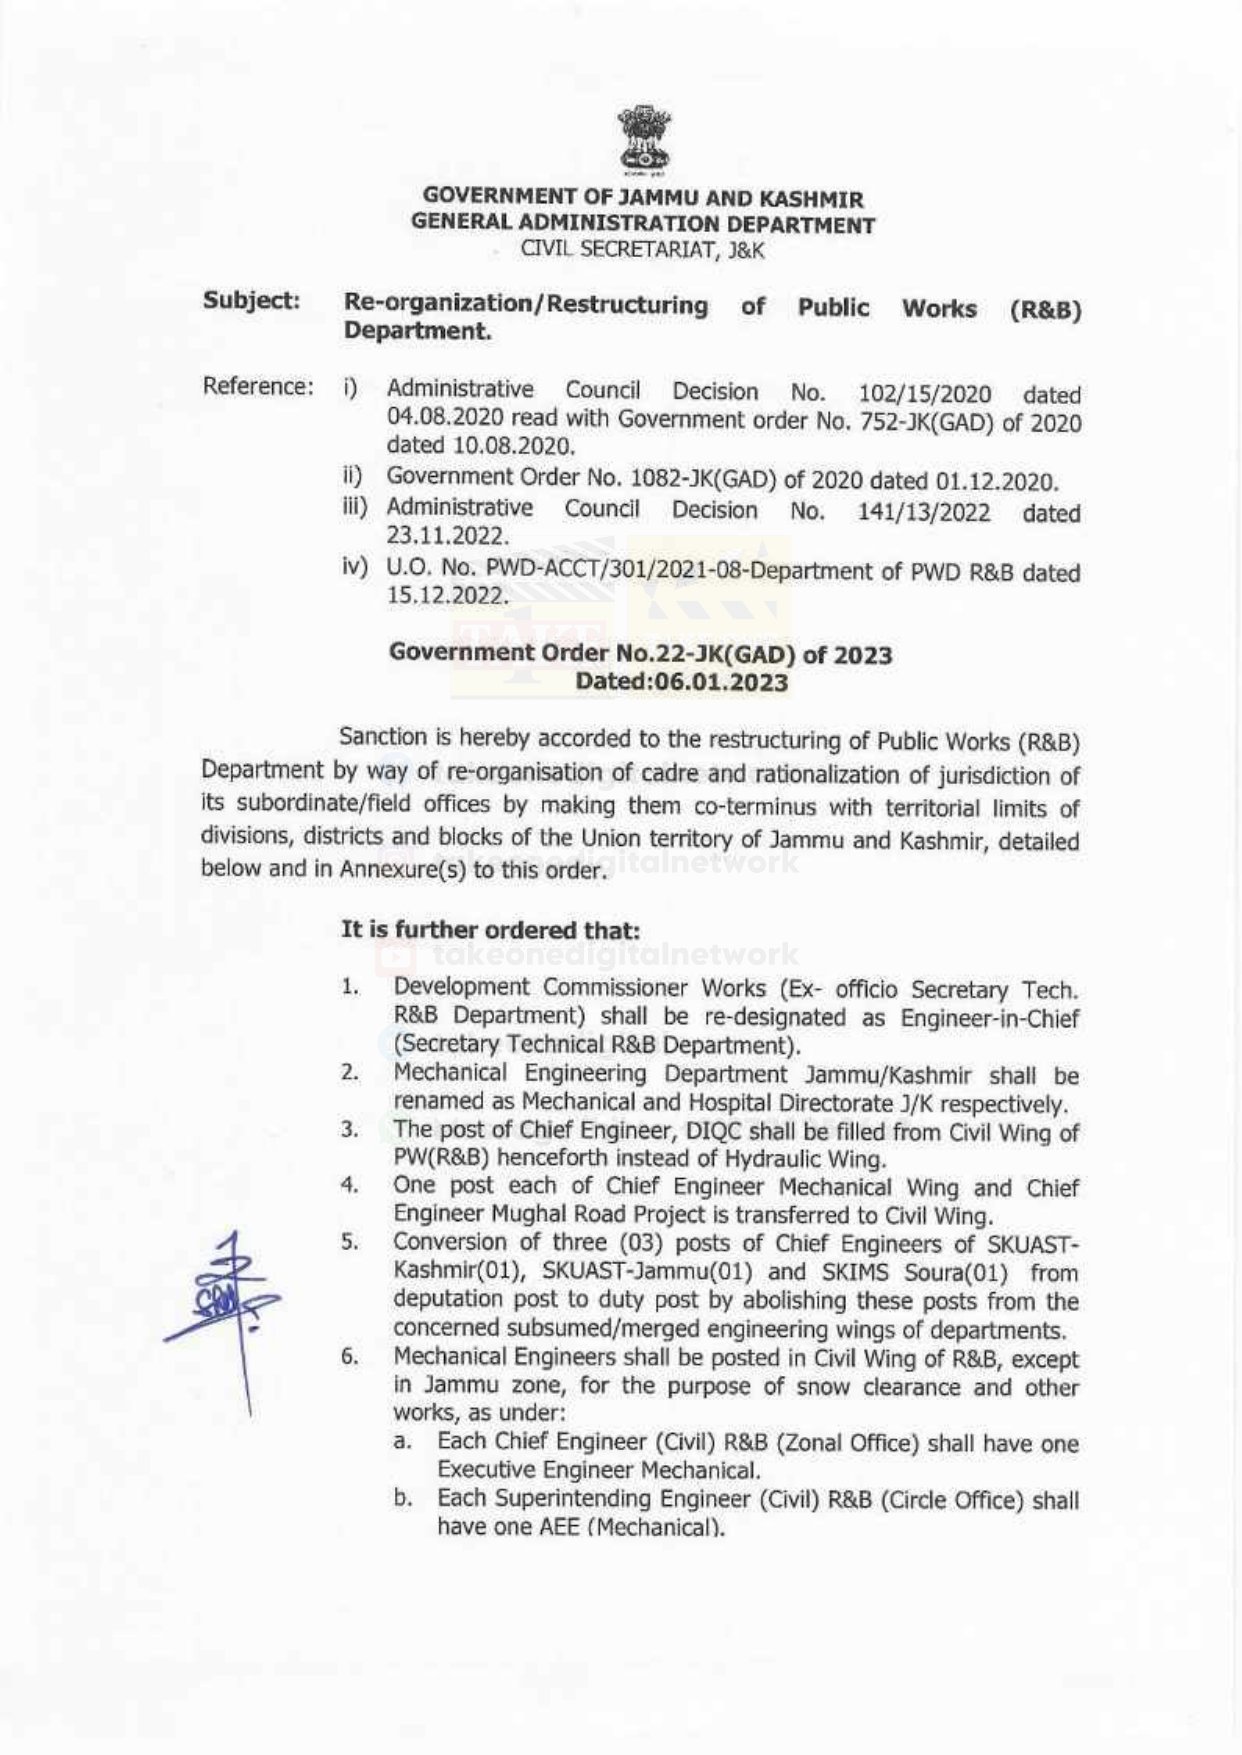 J&K Govt orders Restructuring of R&B Department